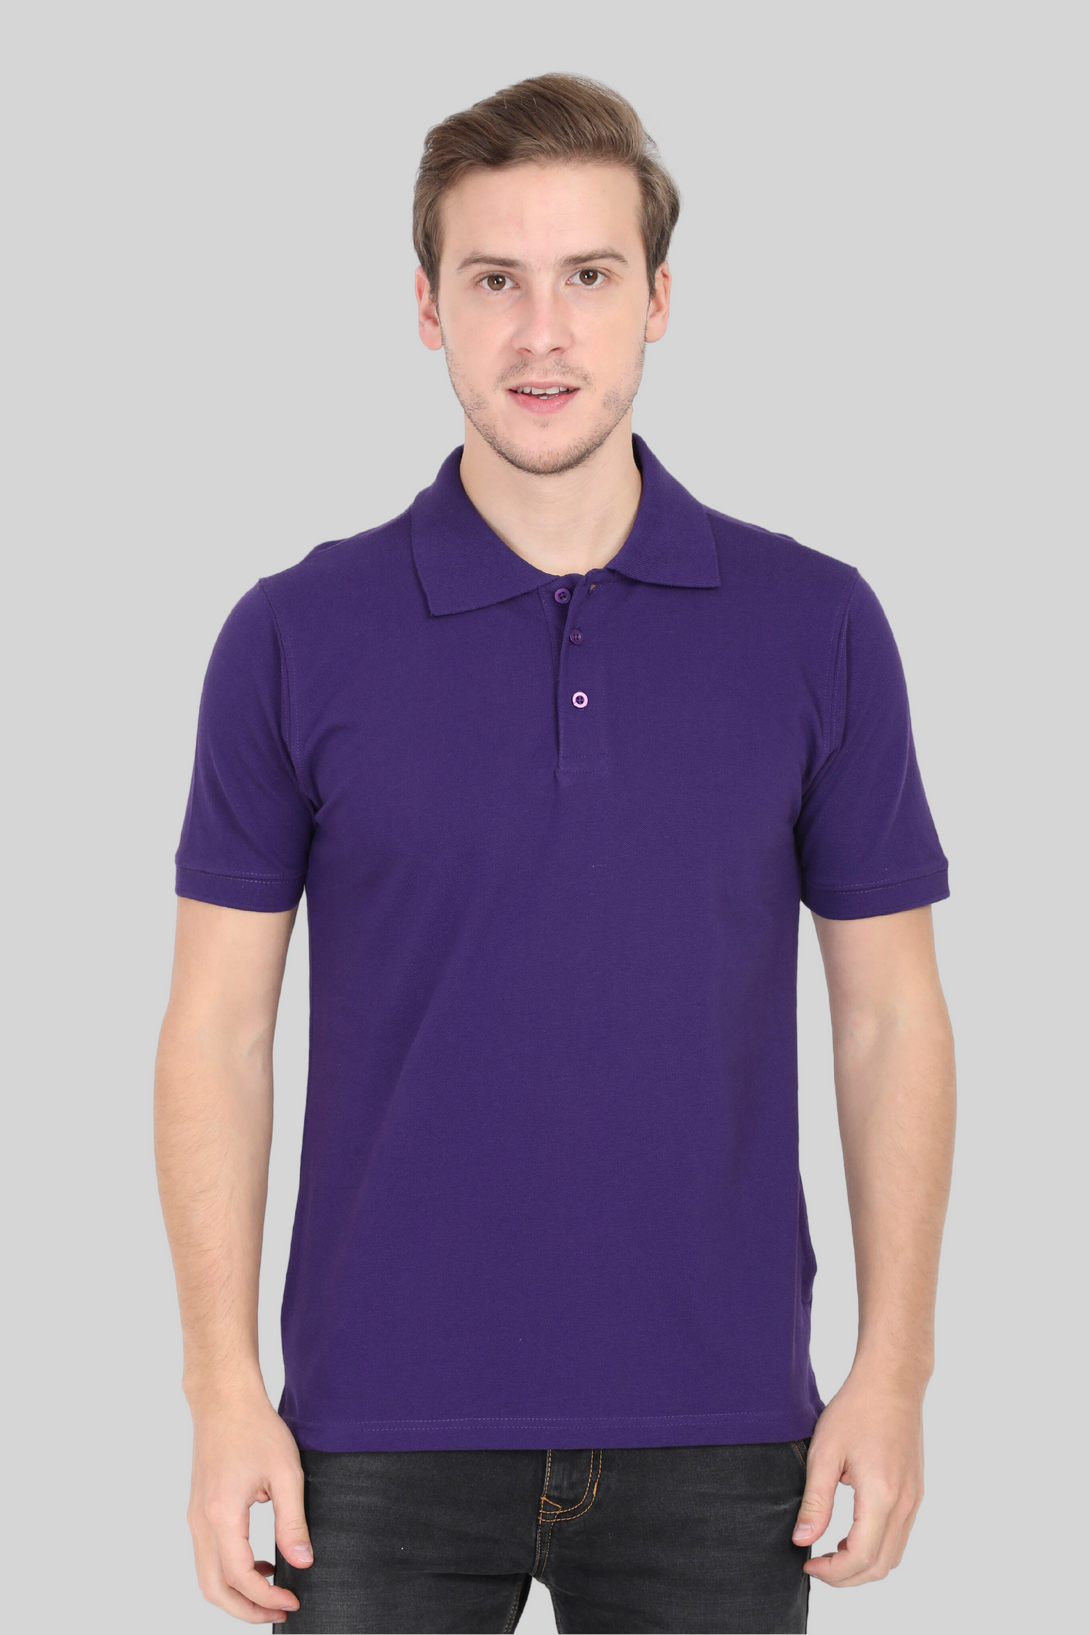 Purple Polo T-Shirt For Men - WowWaves - 1